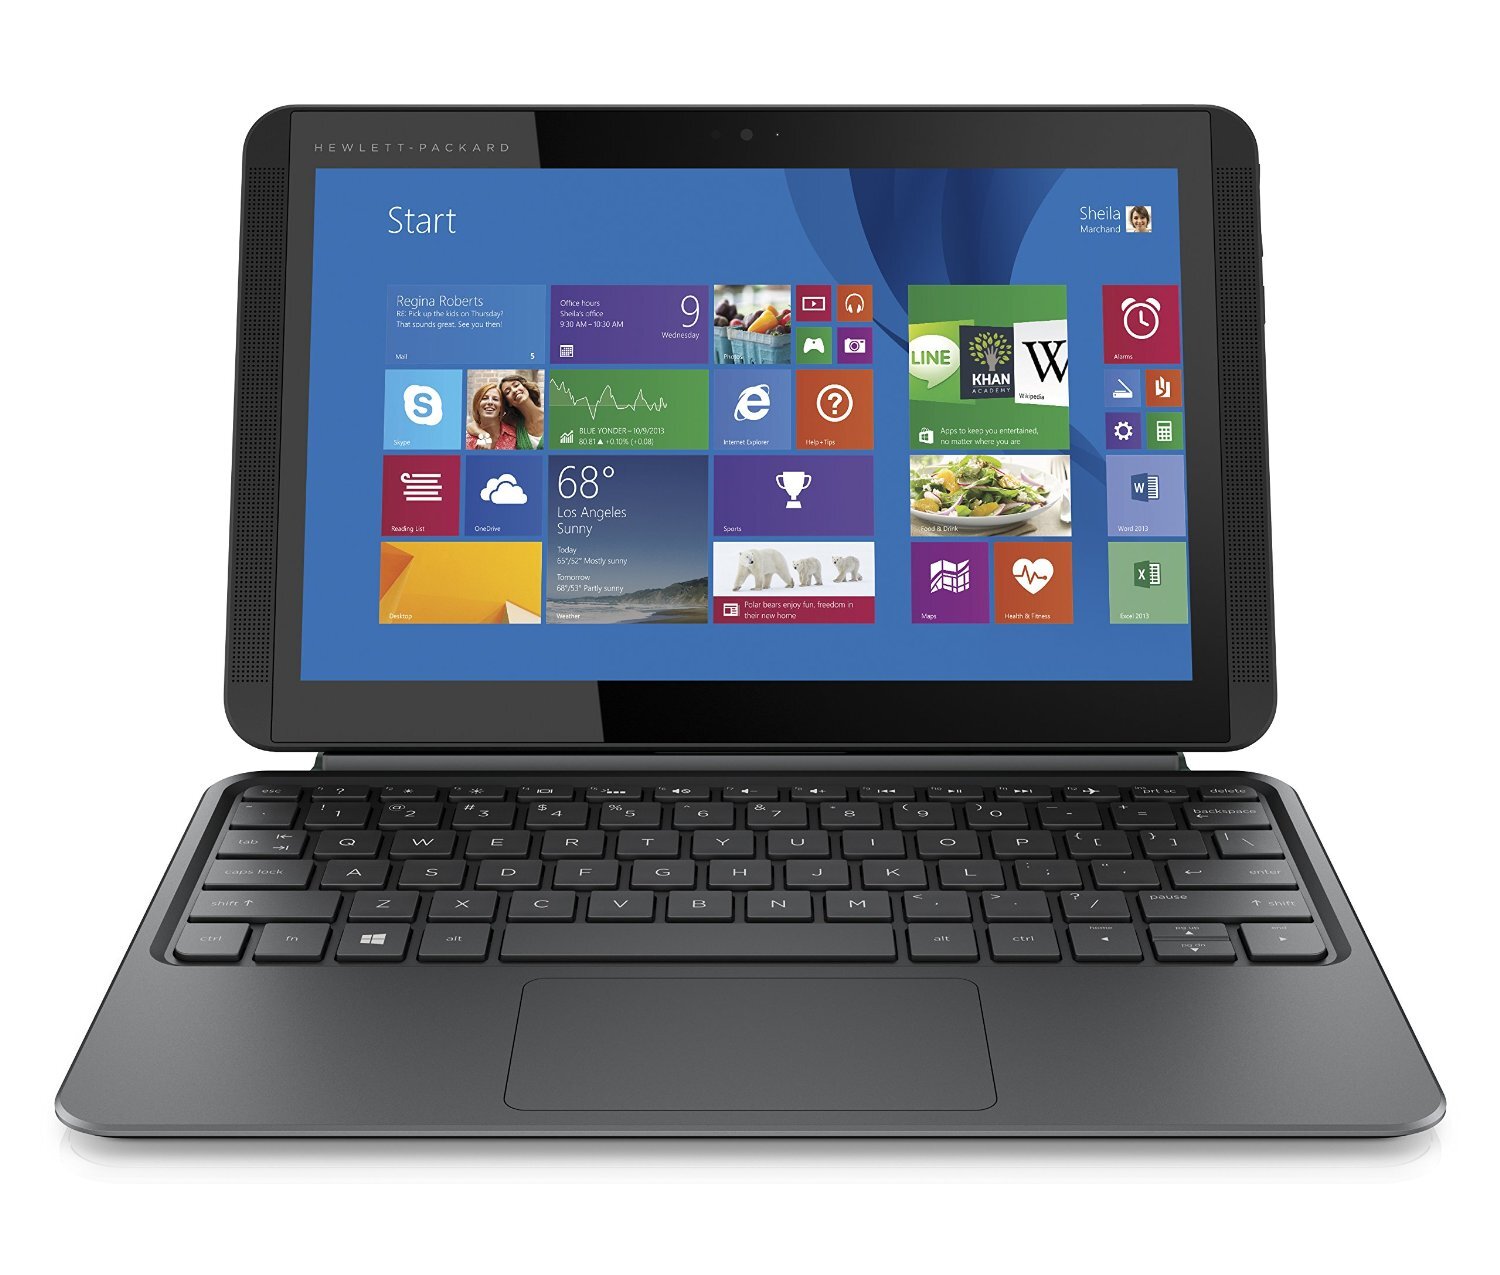 Laptop HP PAVILION X2 10-J027TU (K5C76PA) - Intel Atom Z3745D 1.33GHz, 2GB RAM, 64GB MMC, VGA Intel HD Graphics, 10.1 inch